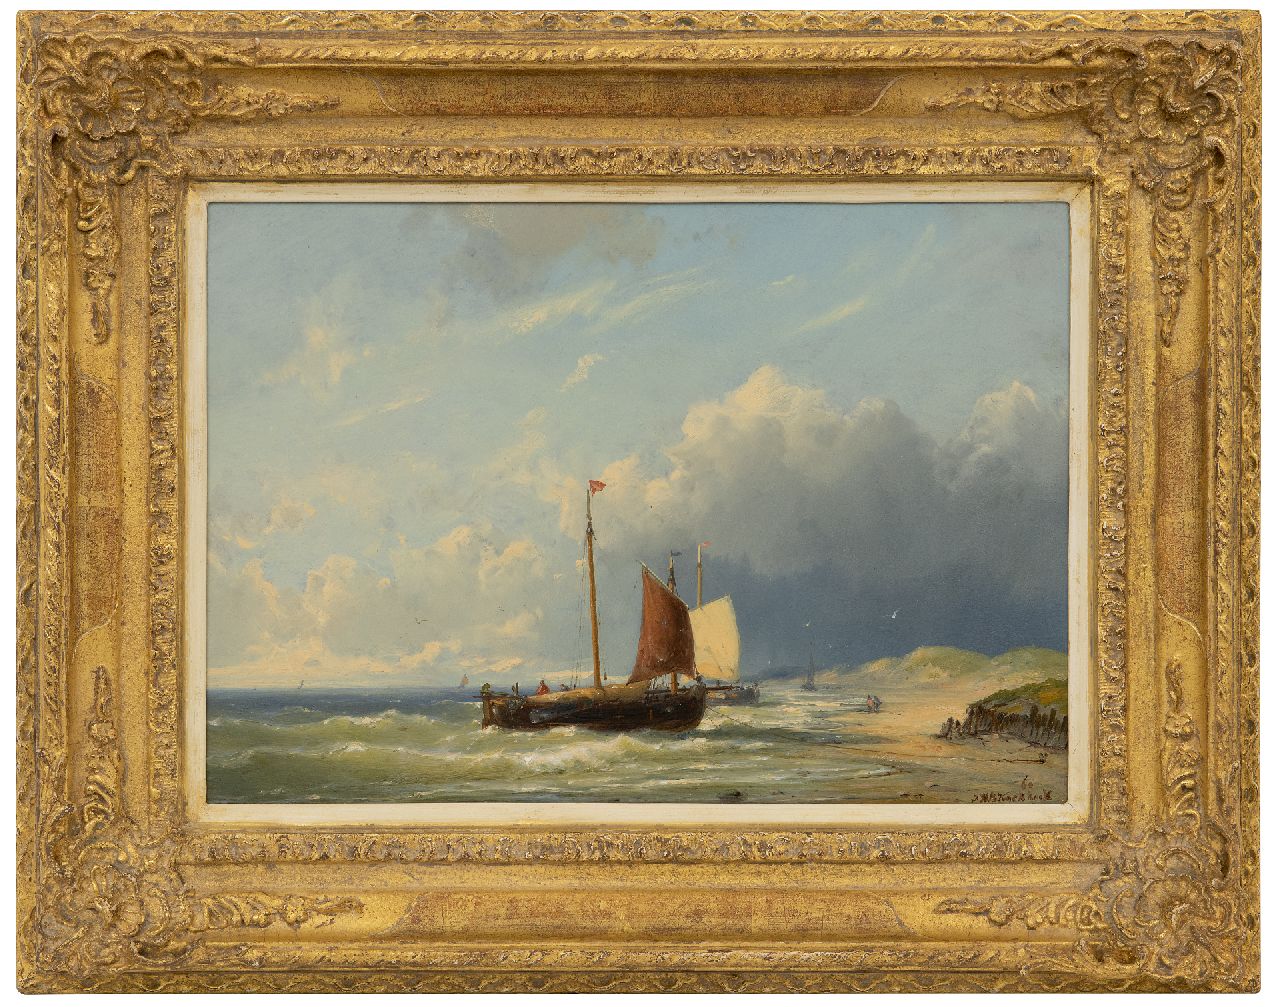 Koekkoek J.H.B.  | Johannes Hermanus Barend 'Jan H.B.' Koekkoek | Paintings offered for sale | Fishing barges at the beach, oil on panel 27.2 x 38.9 cm, signed l.r. and dated '60